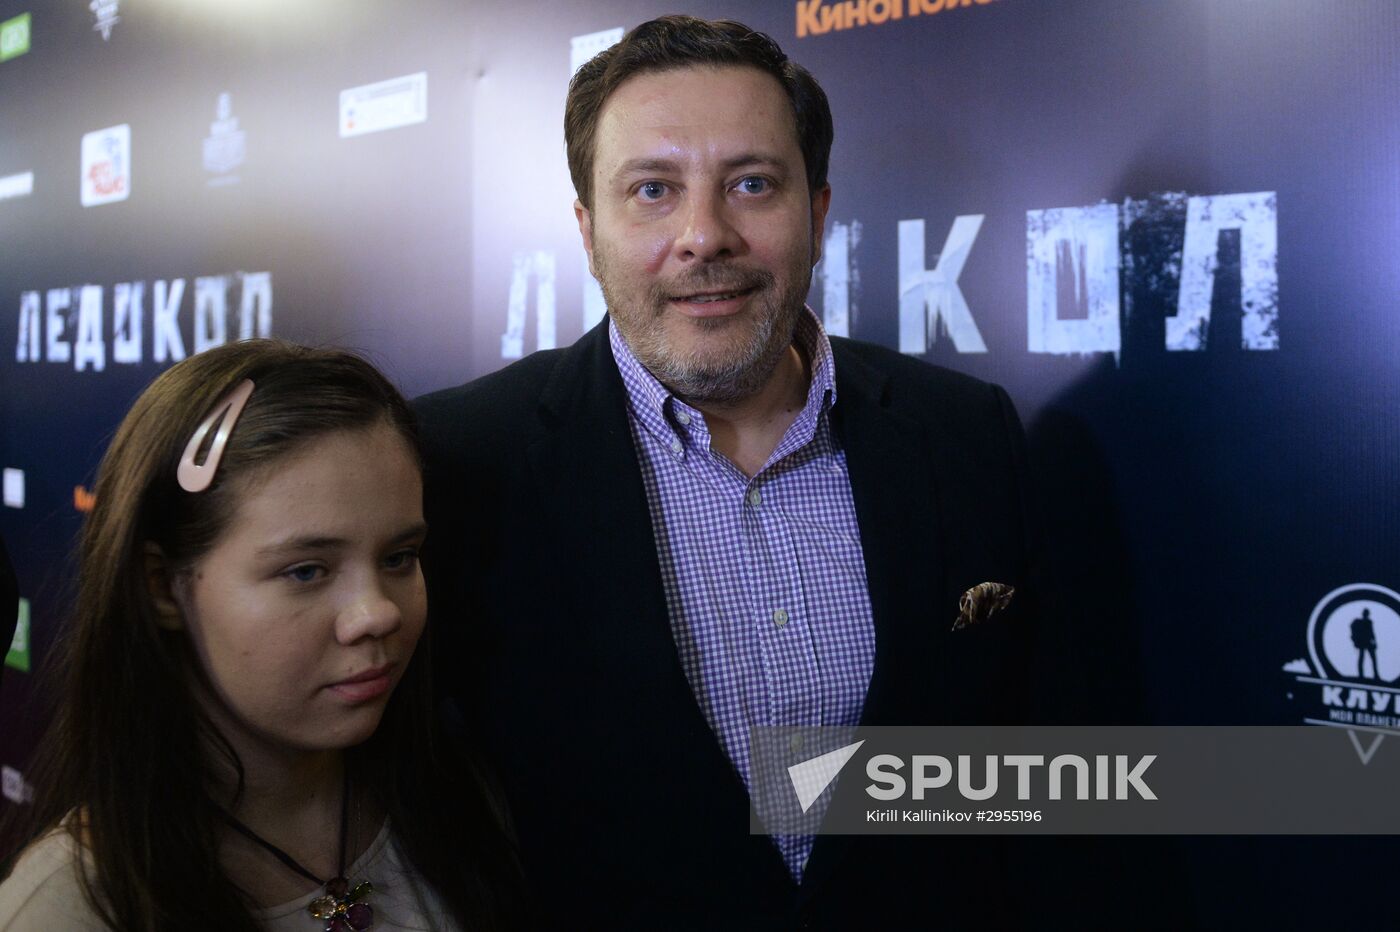 'Icebreaker' premieres in Moscow